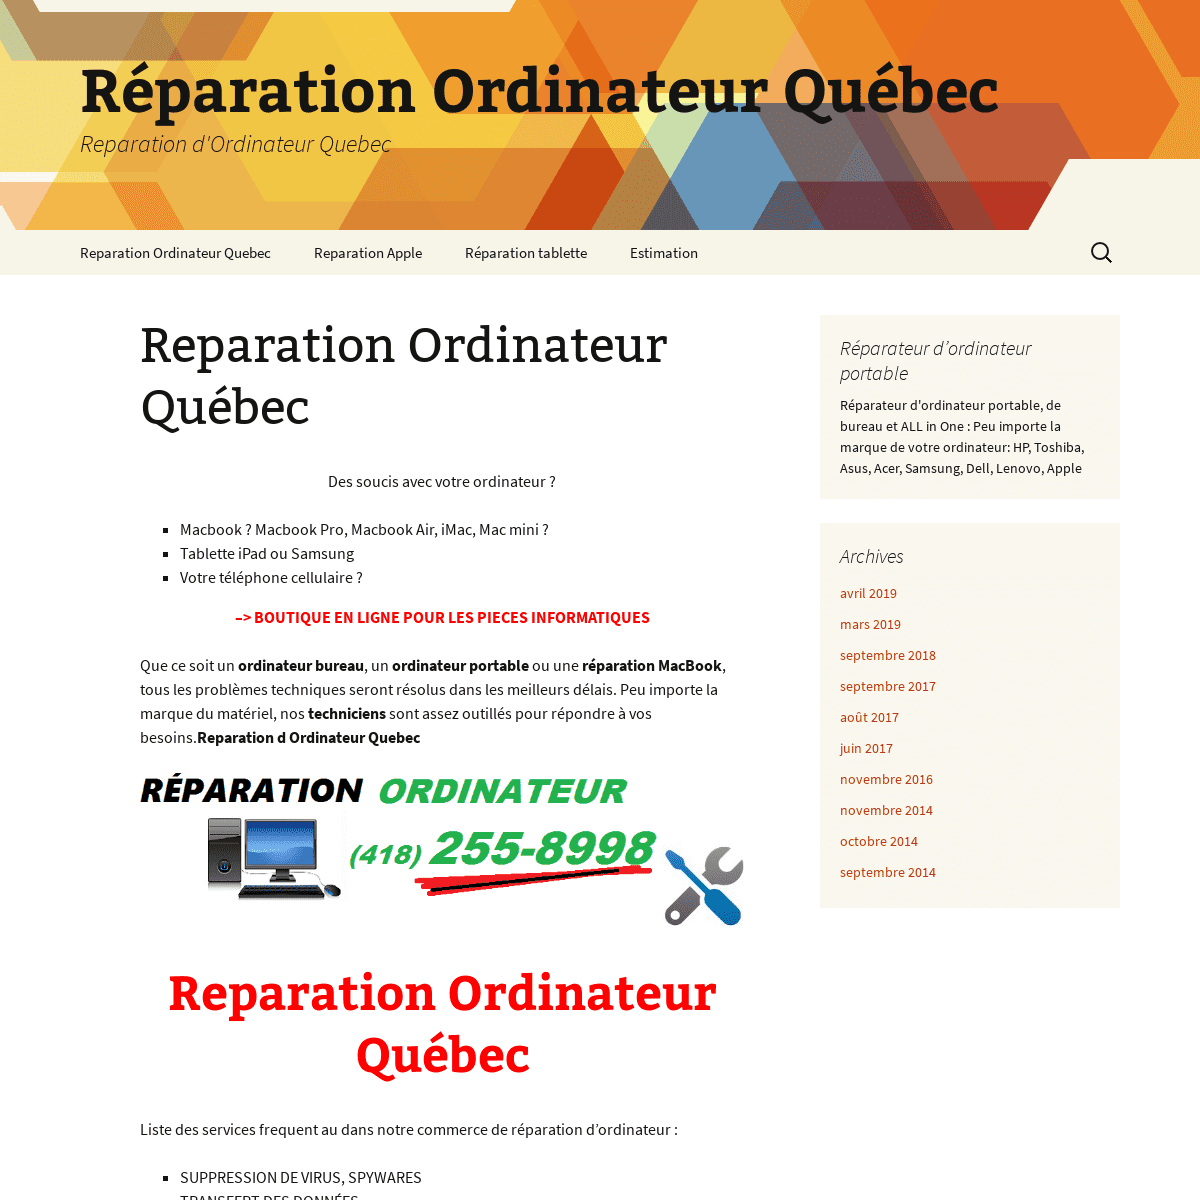 A complete backup of reparation-ordinateur-quebec.ca